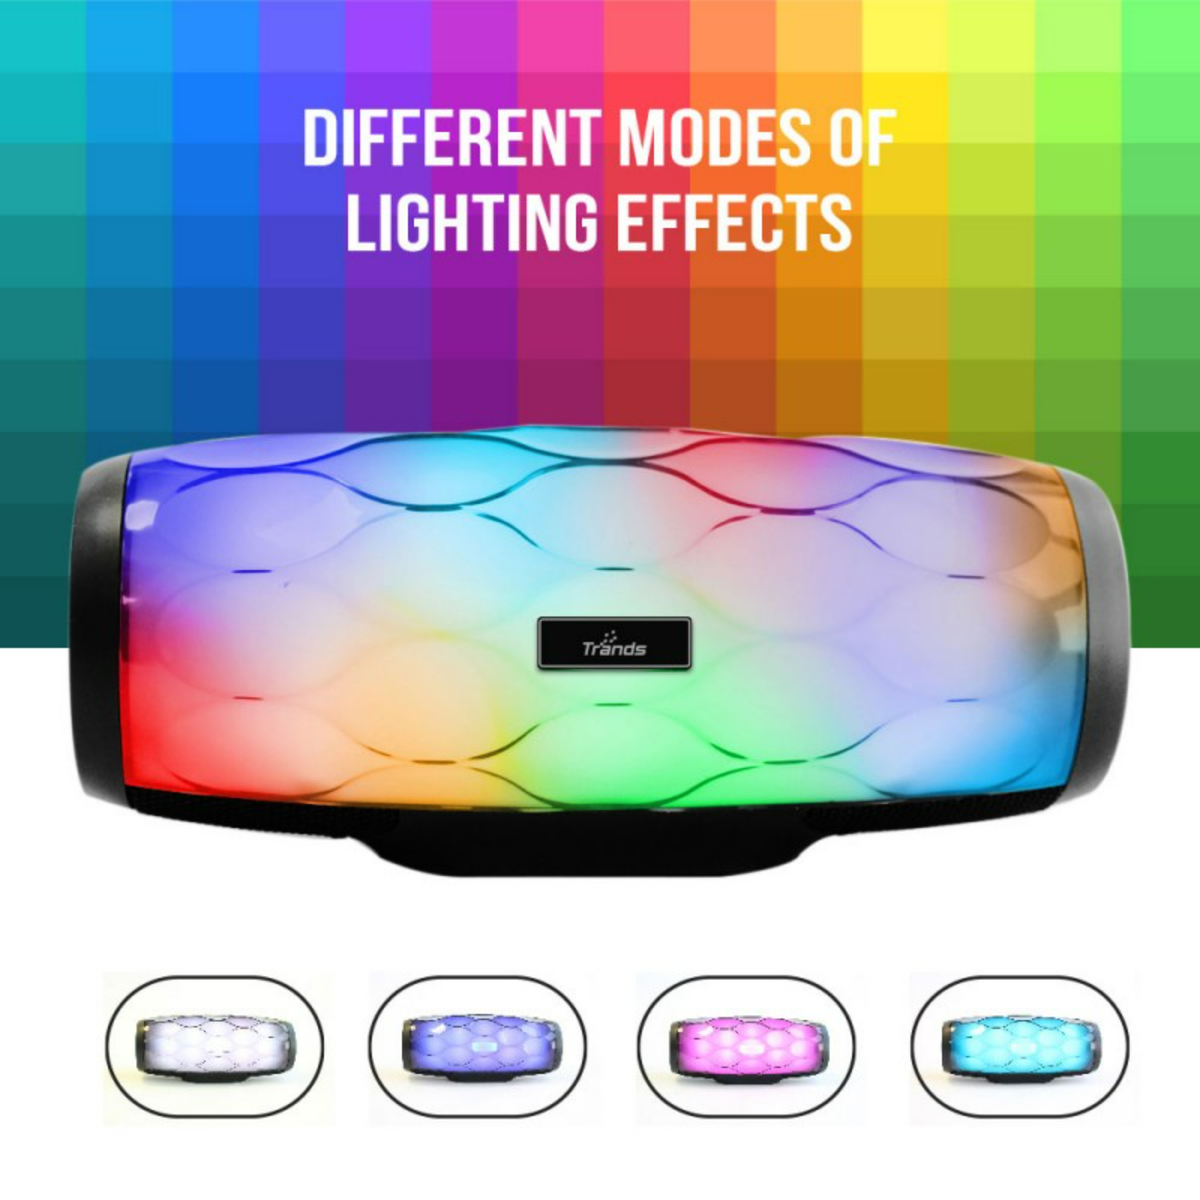 Trands Portable Colourful LED Bluetooth speaker, Omega